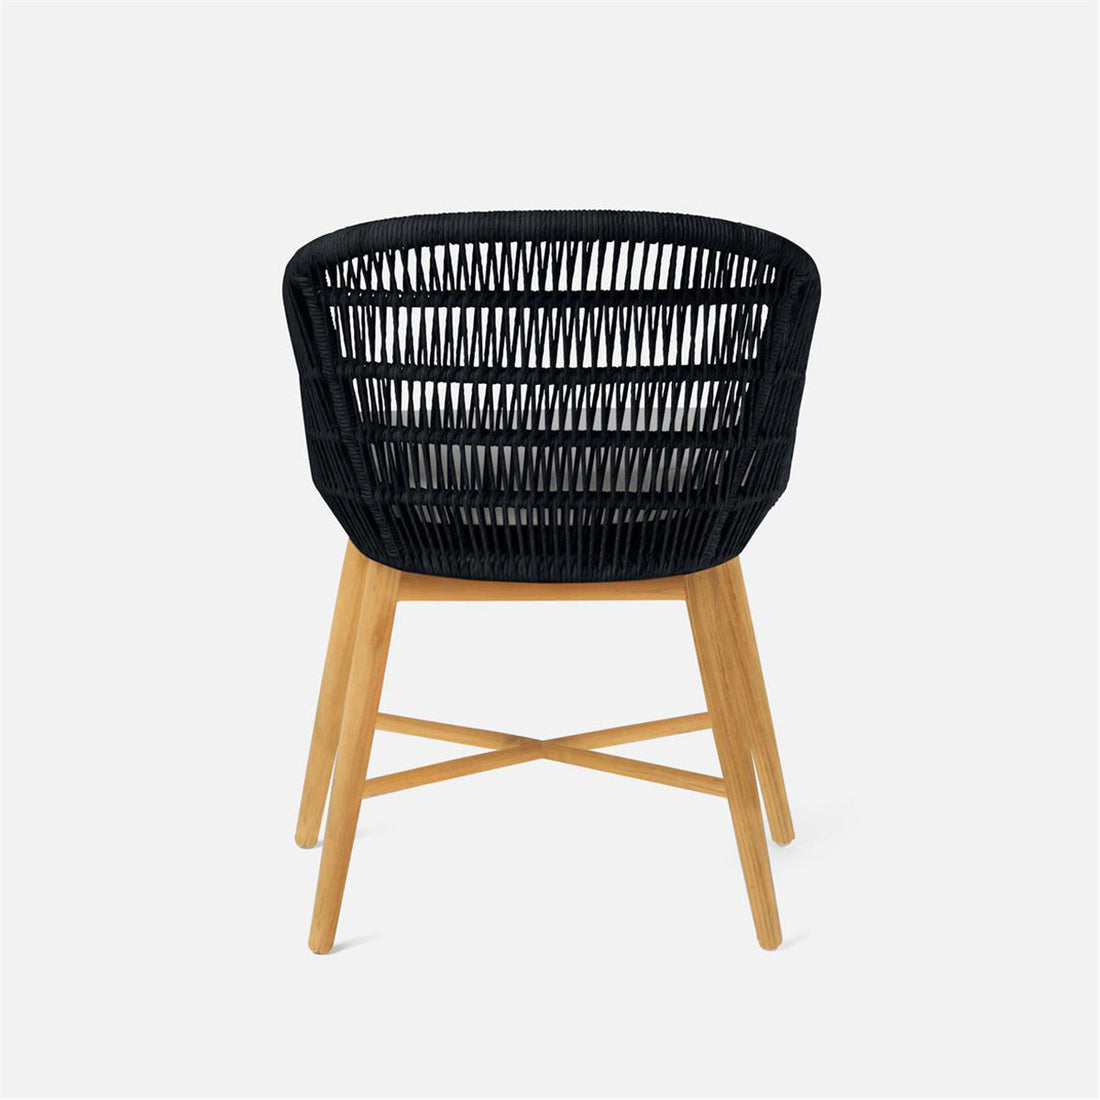 Made Goods Jolie Teak Outdoor Dining Chair in Alsek Fabric